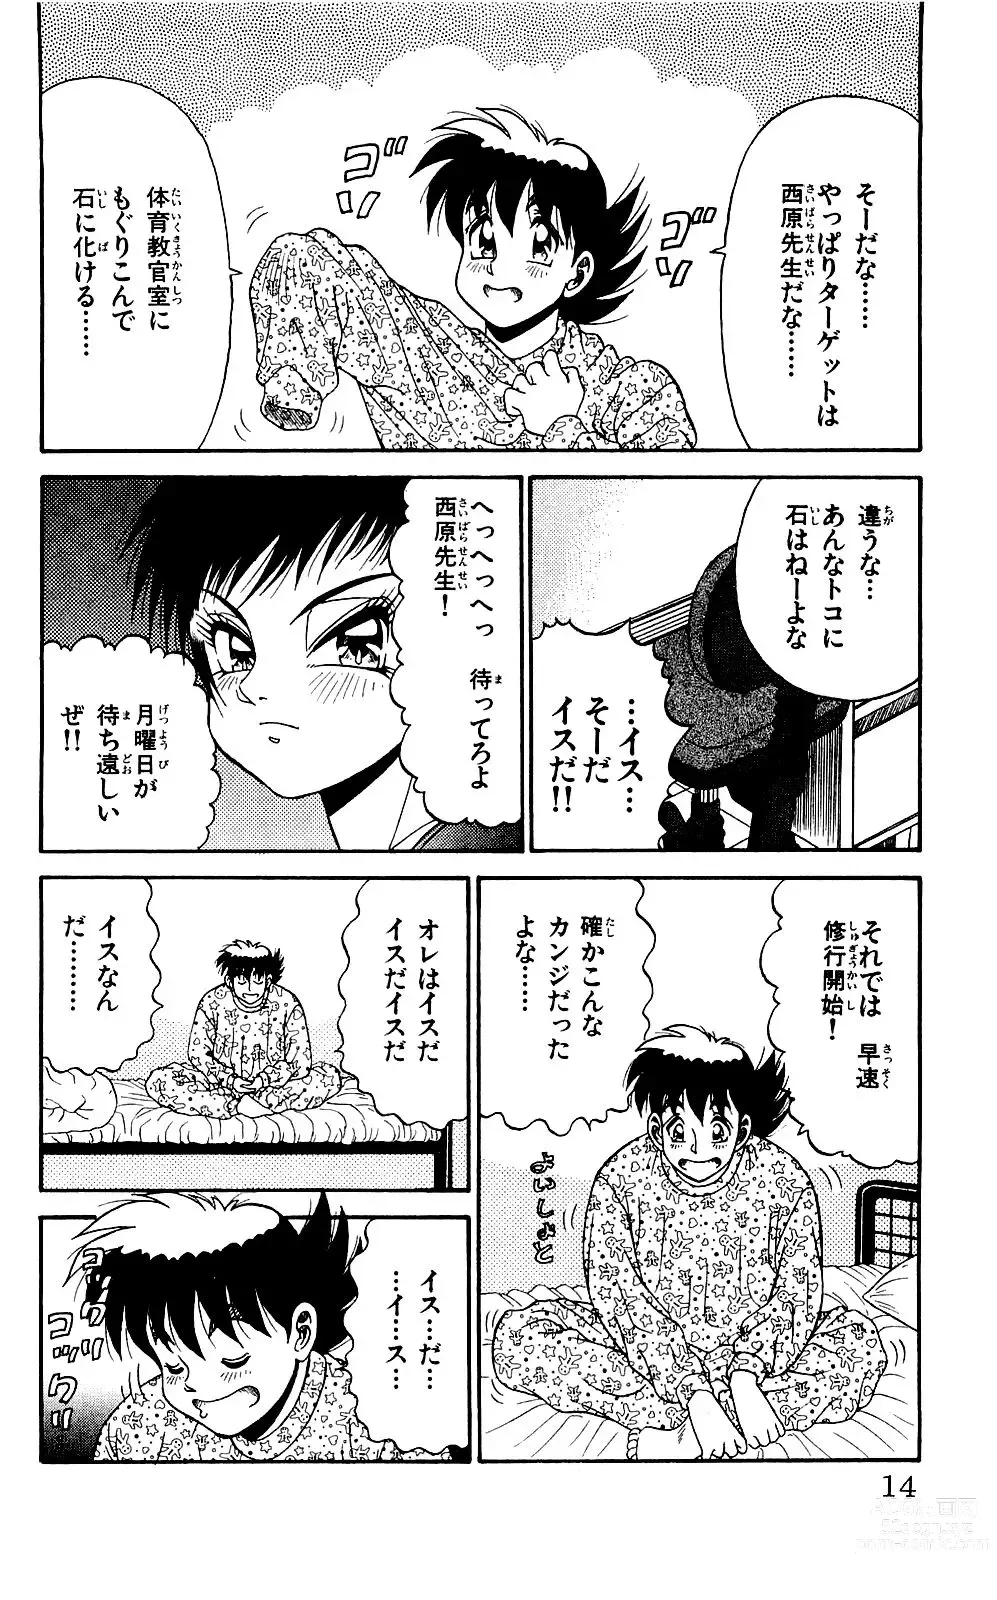 Page 12 of manga Orette Piyoritan 07